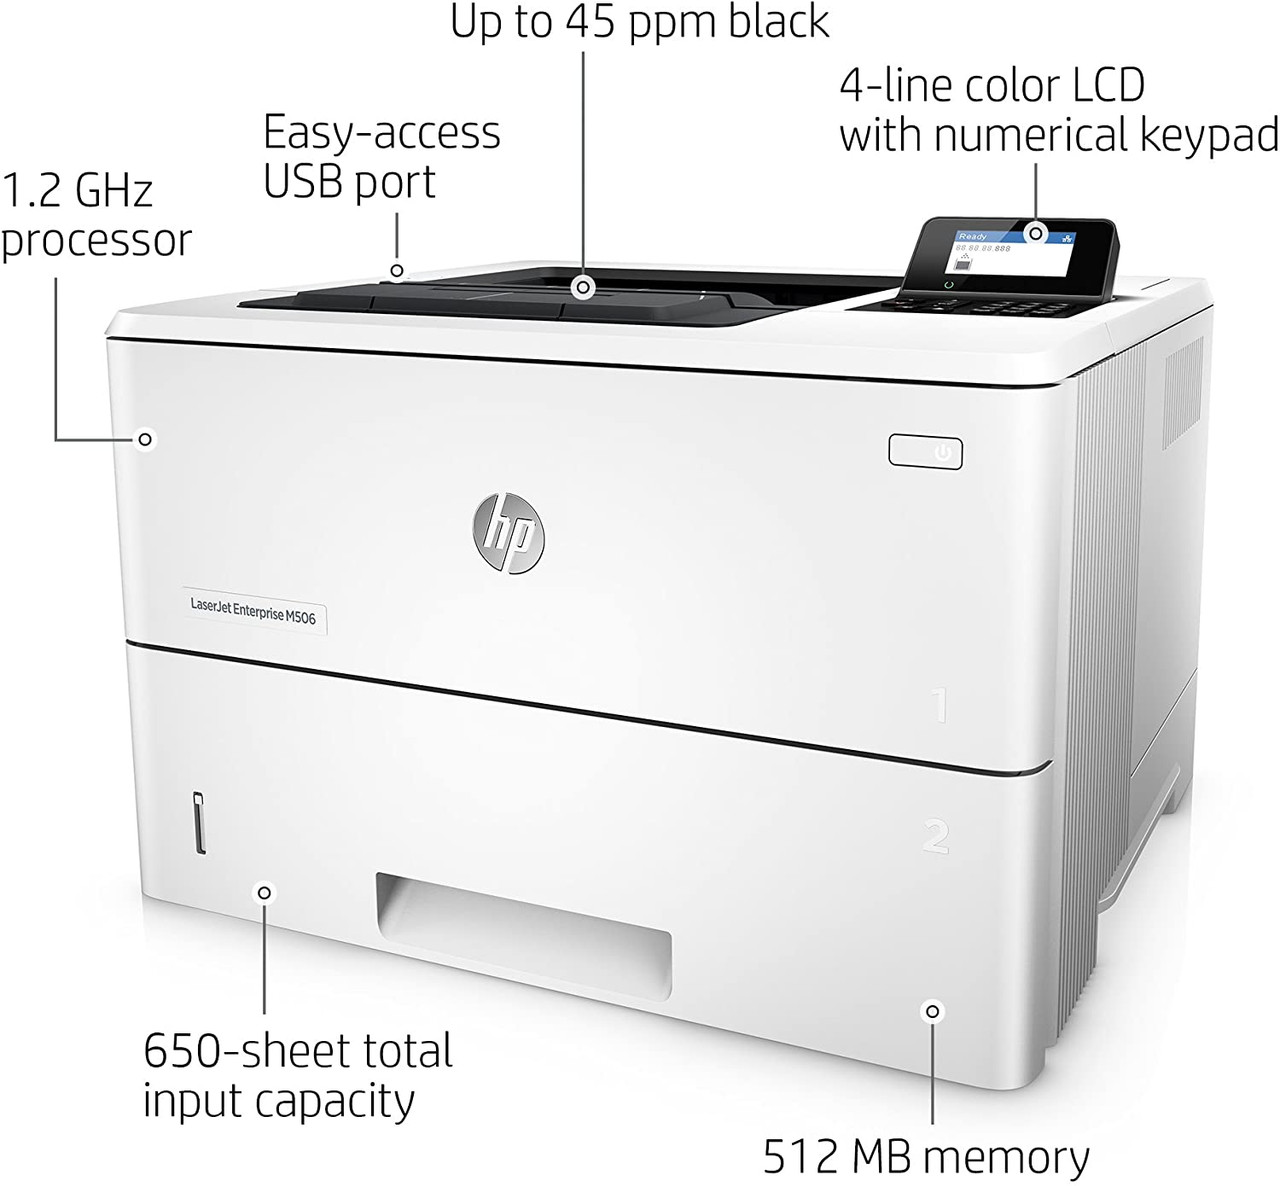 HP LaserJet Enterprise M507dn Mono Laser Printer features